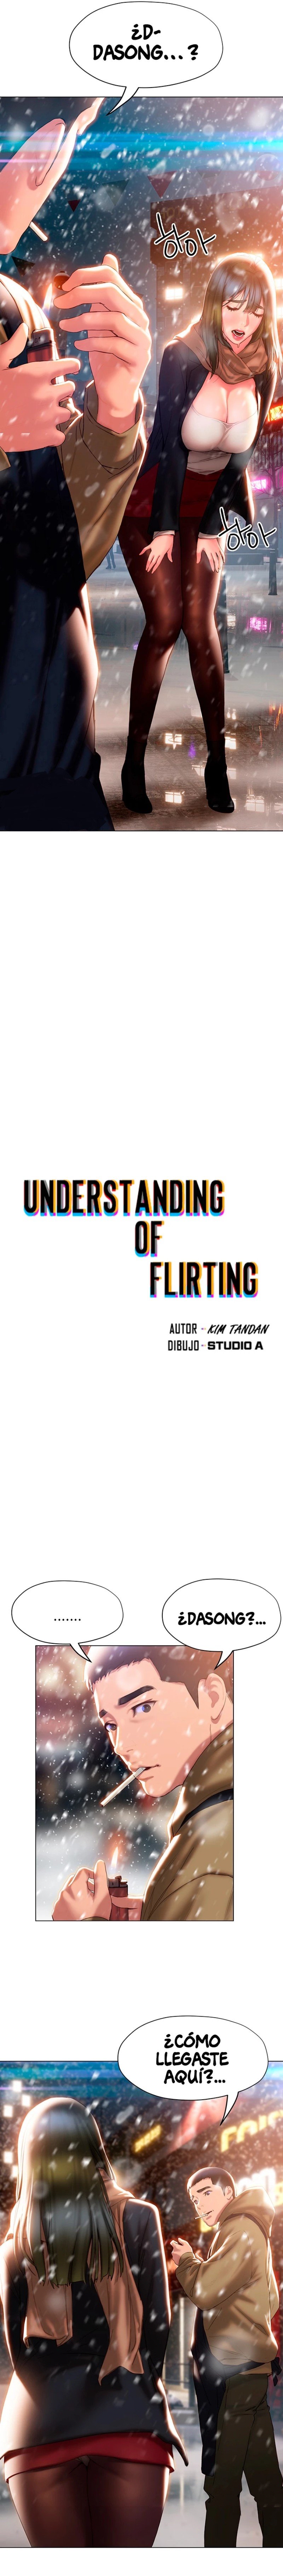 understanding-of-flirting-raw-chap-41-1